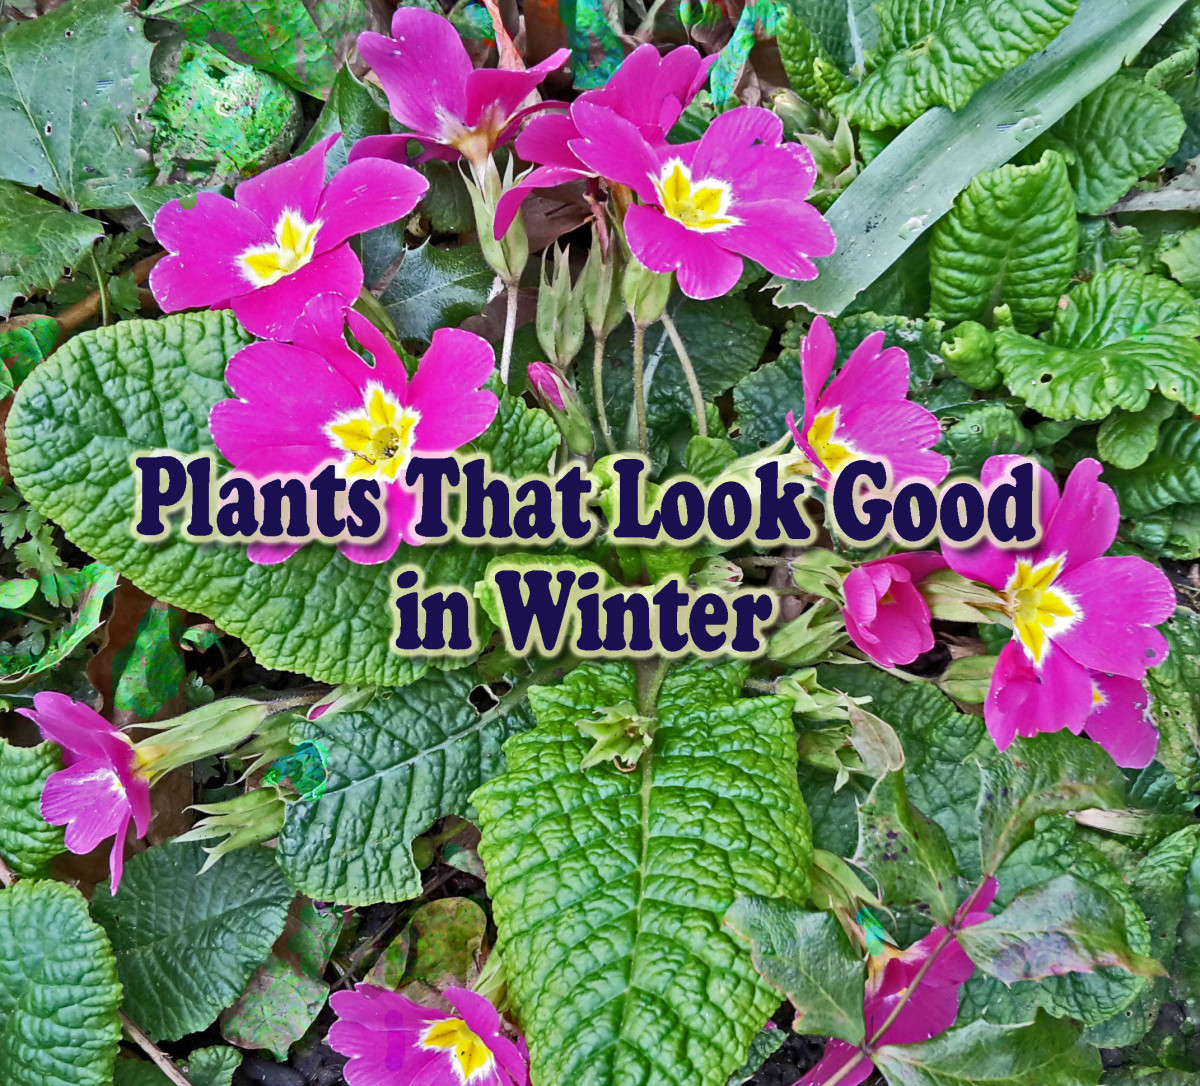 6 Plants That Look Good in Winter